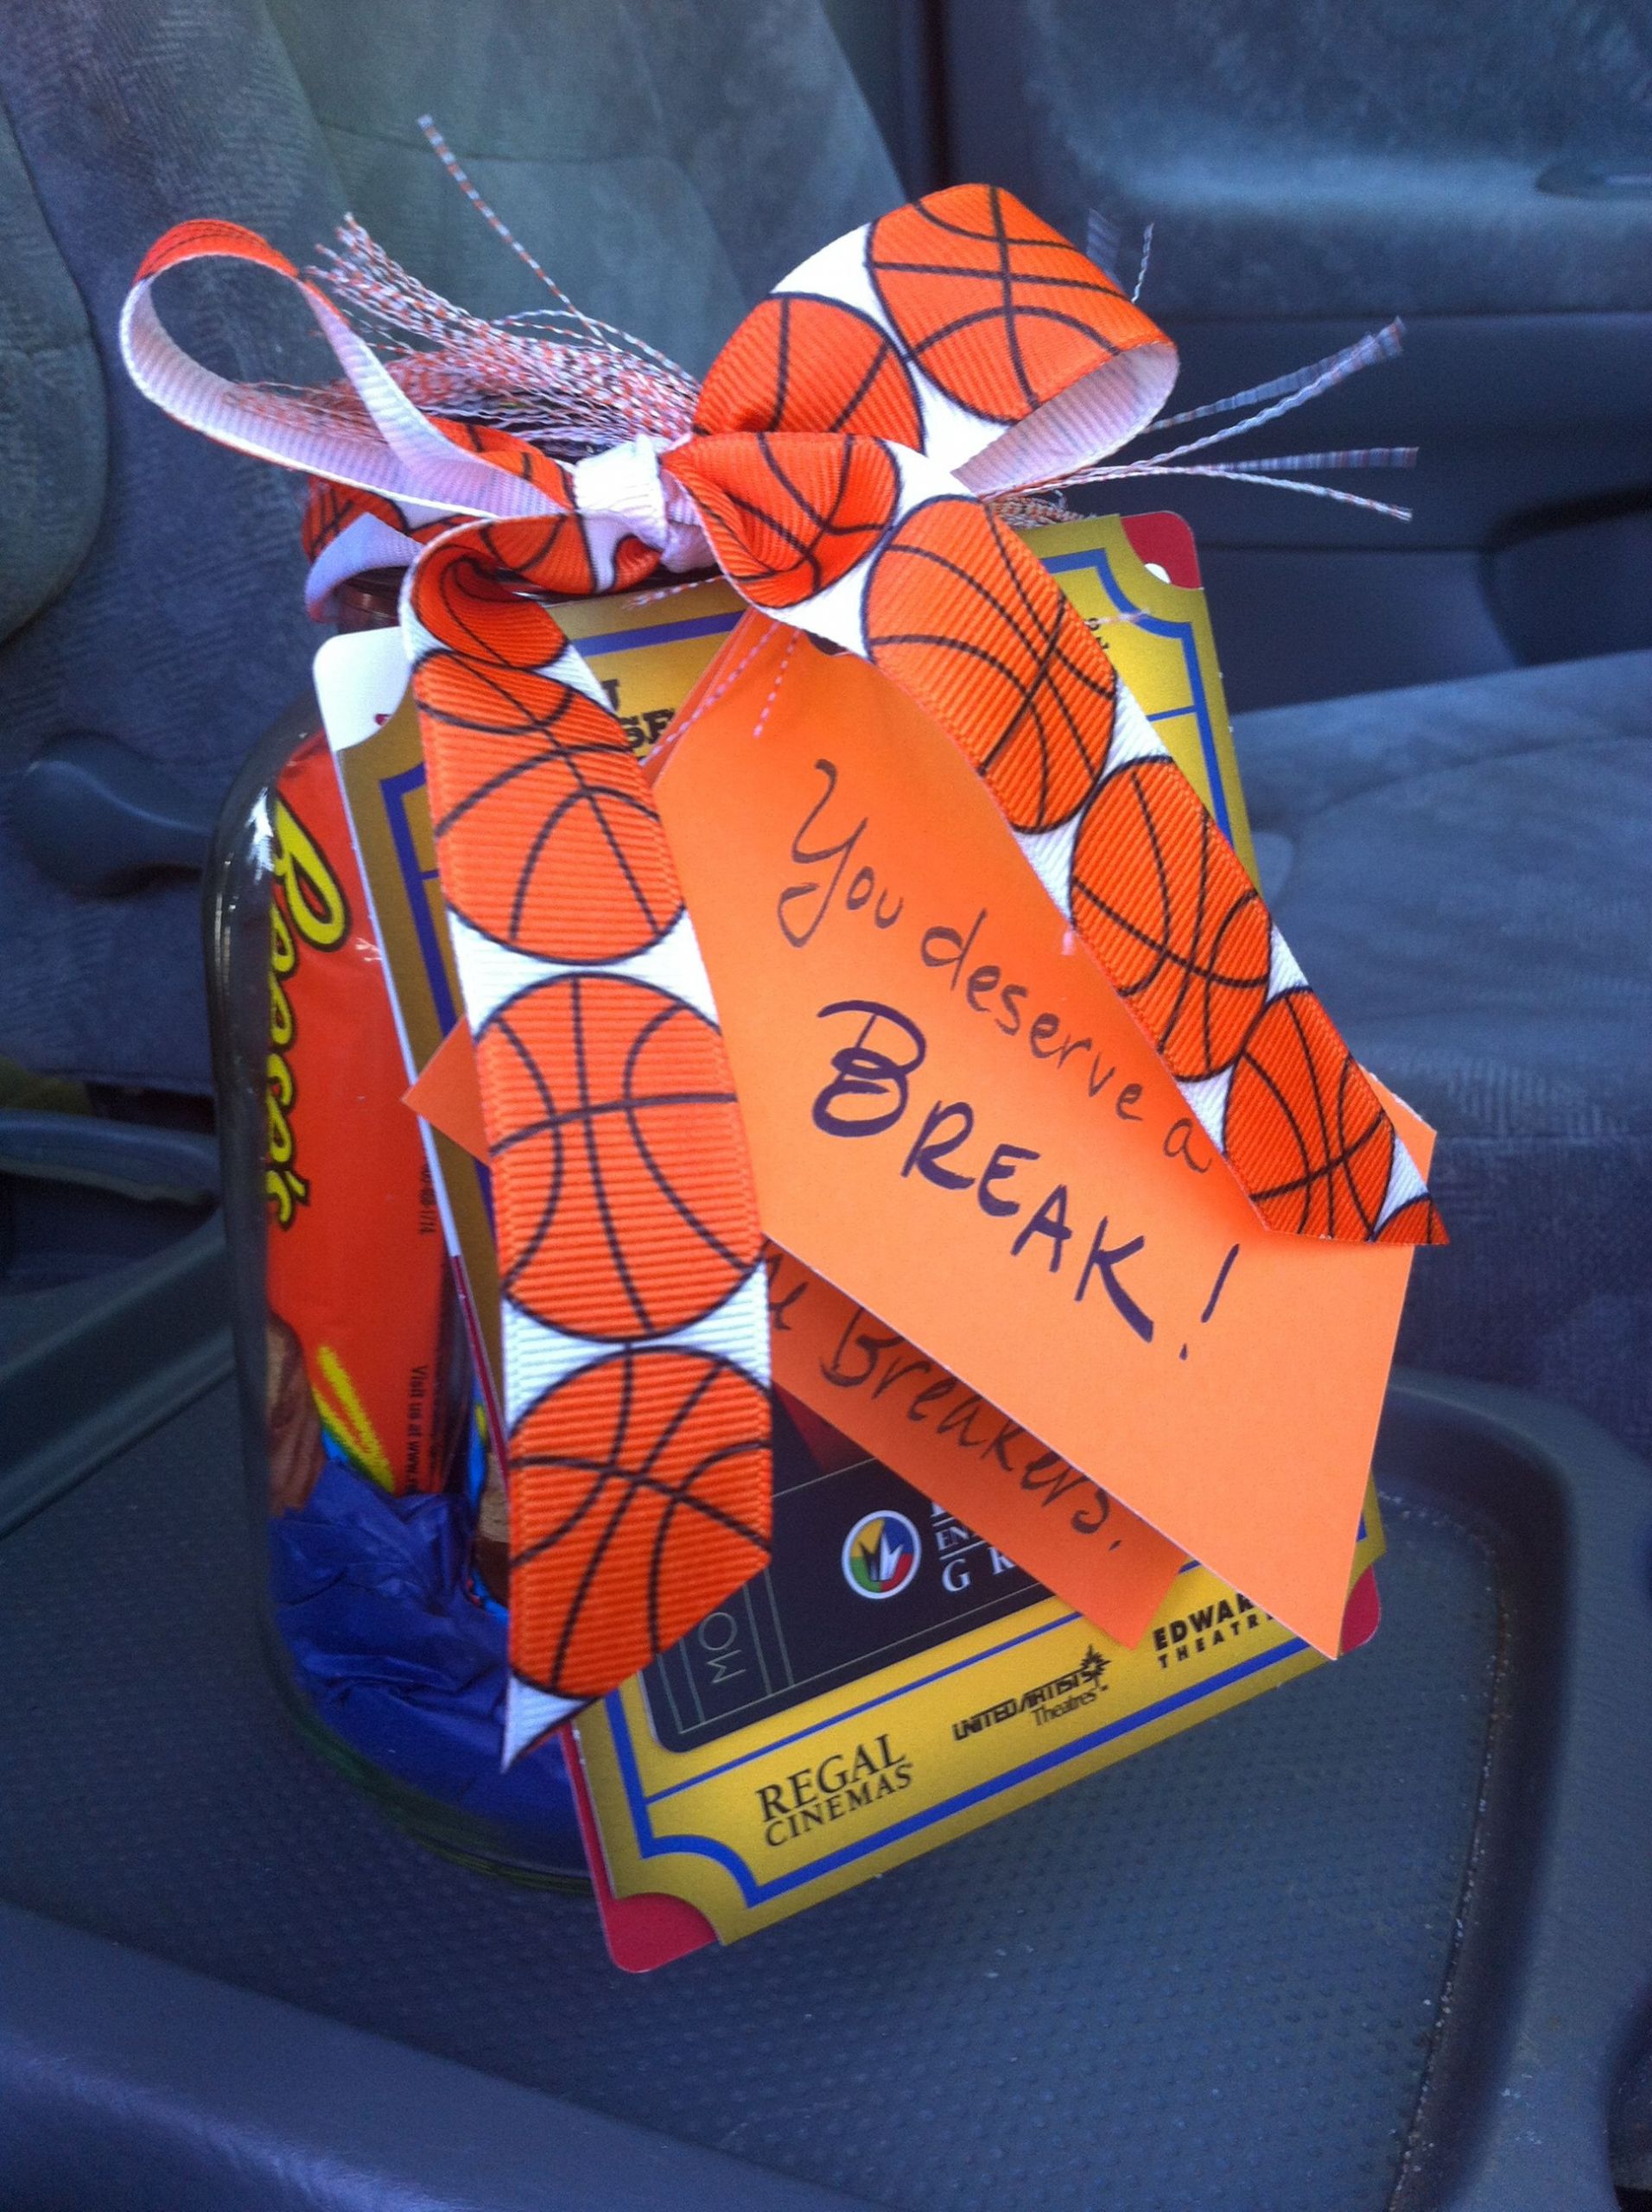 Basketball Coach Gift Ideas Pinterest
 Basketball Coach deserves a BREAK with Fast Break candy